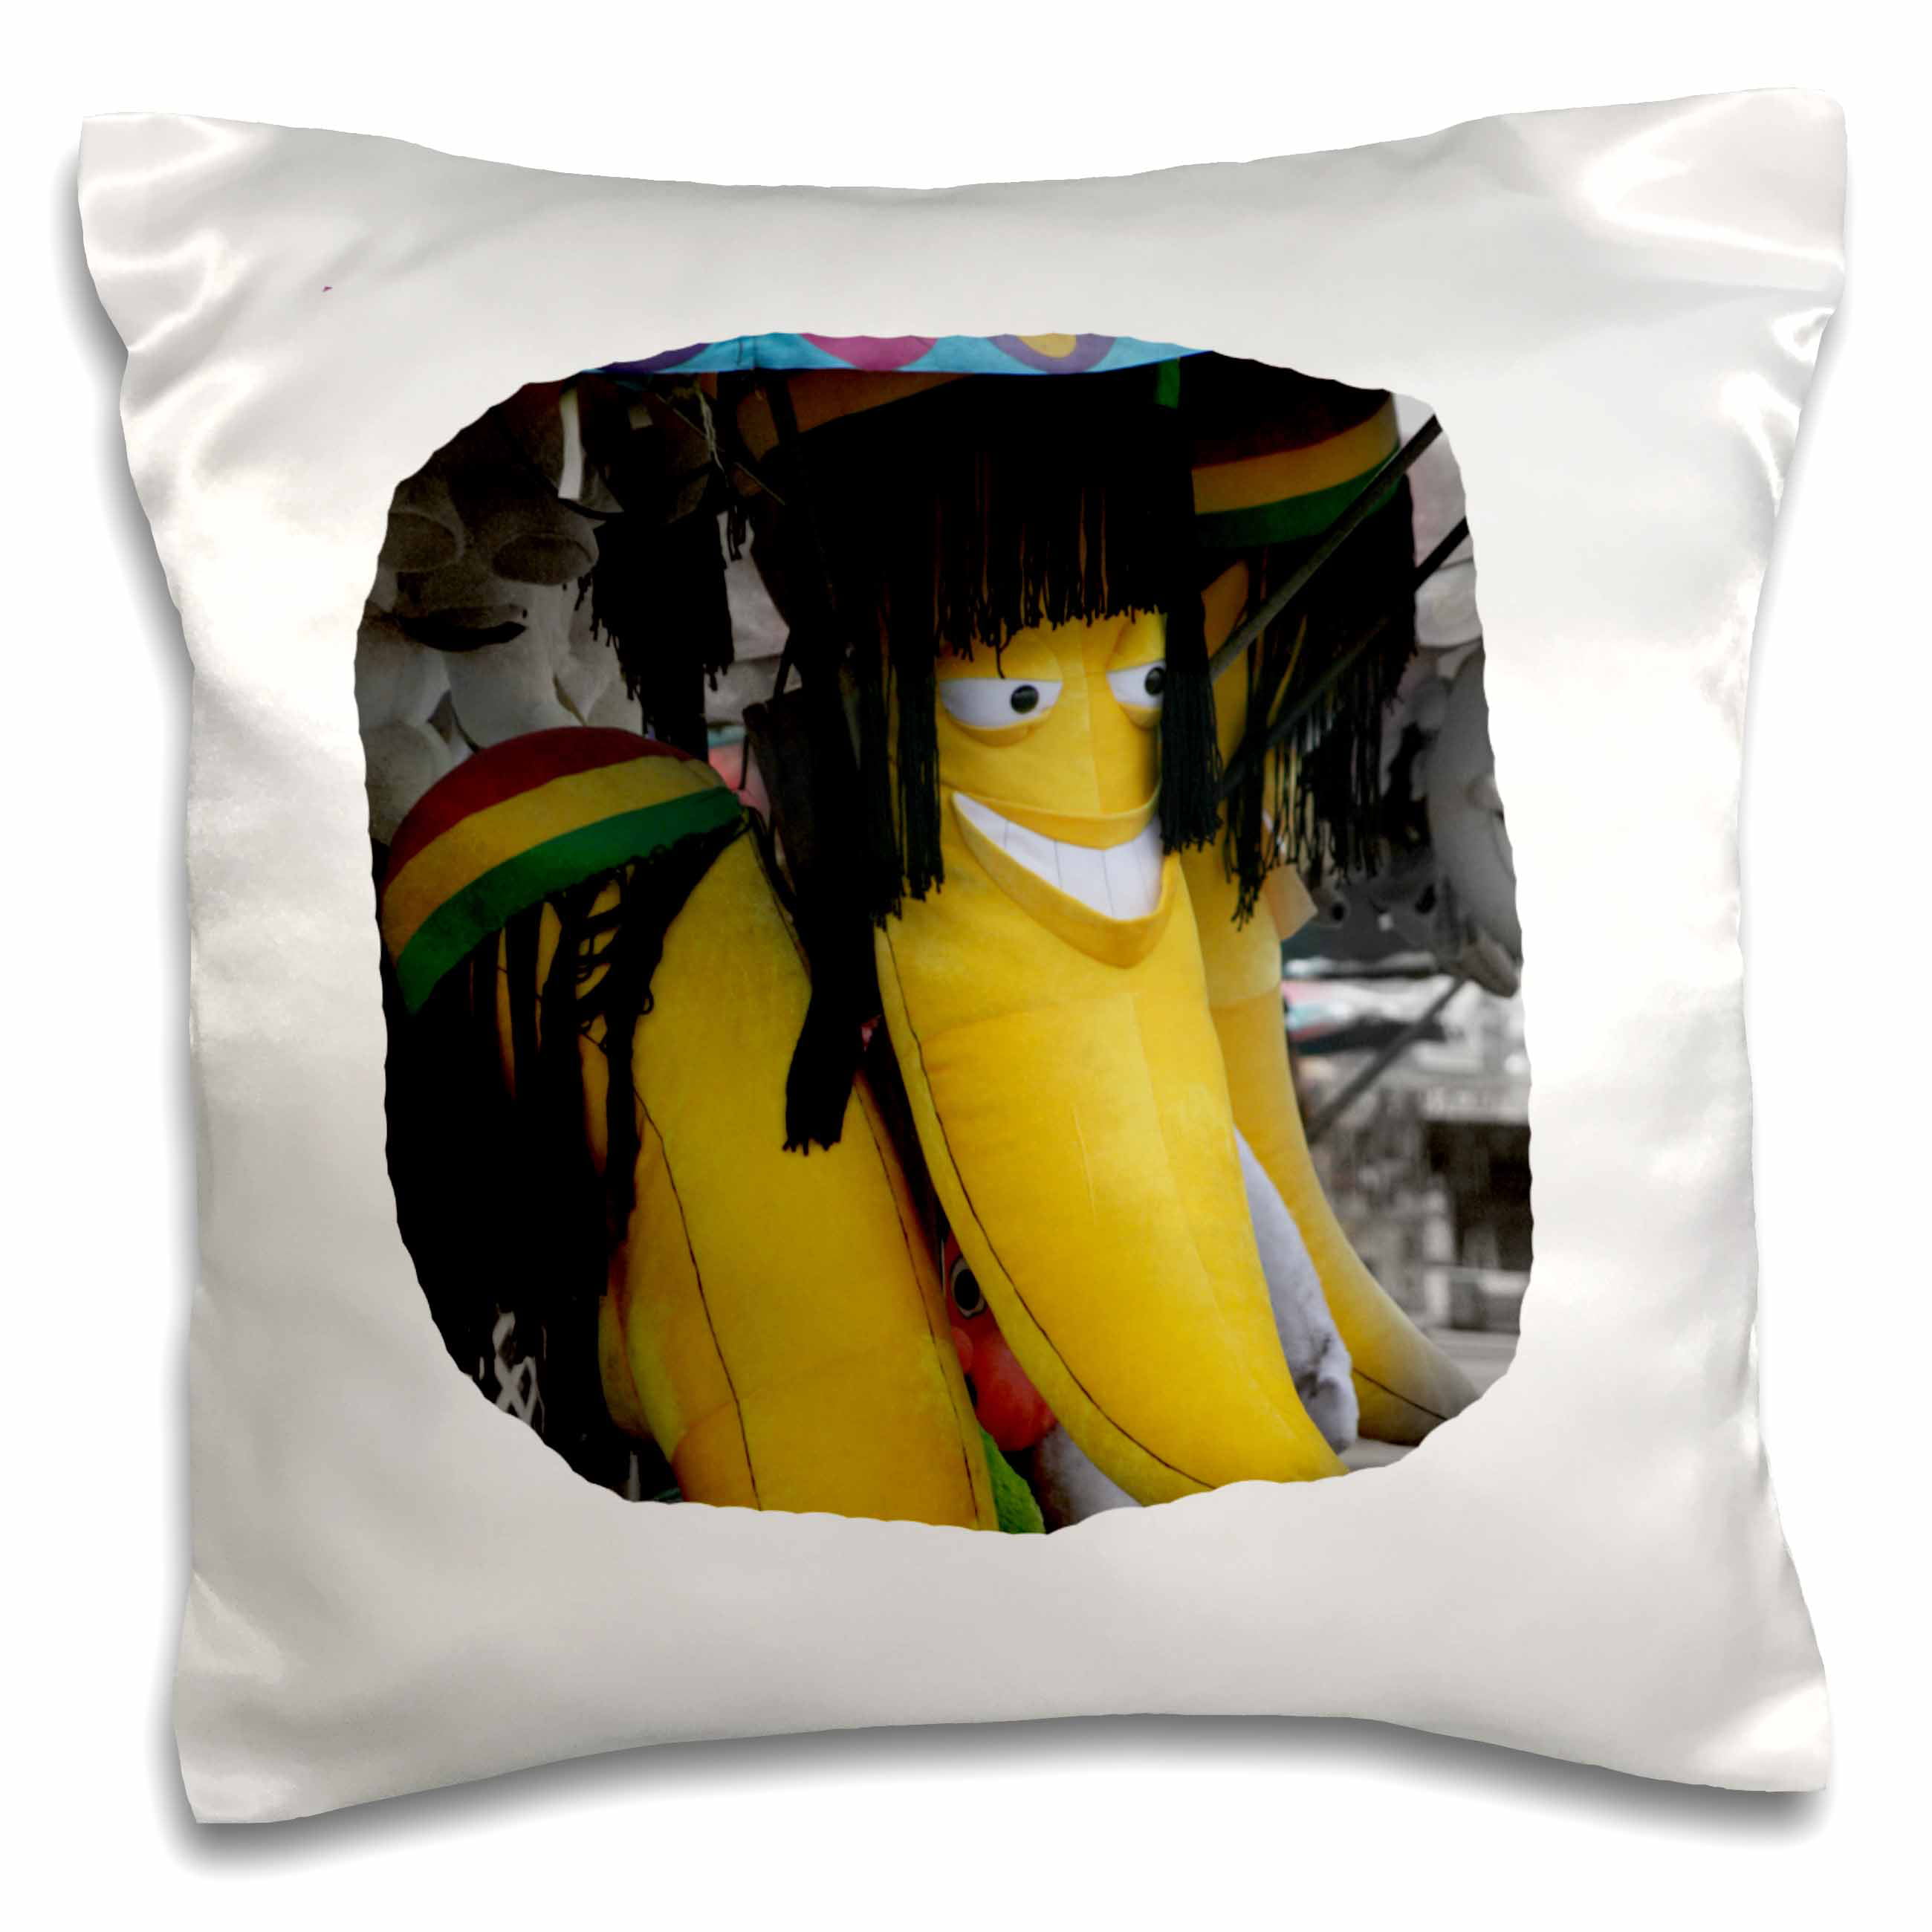 35CM Cute Plush Toys Banana Pillow Sleeping Plush Cute Banana Doll, ZQSM Plush Toys Banana Pillow Long Throw Pillows